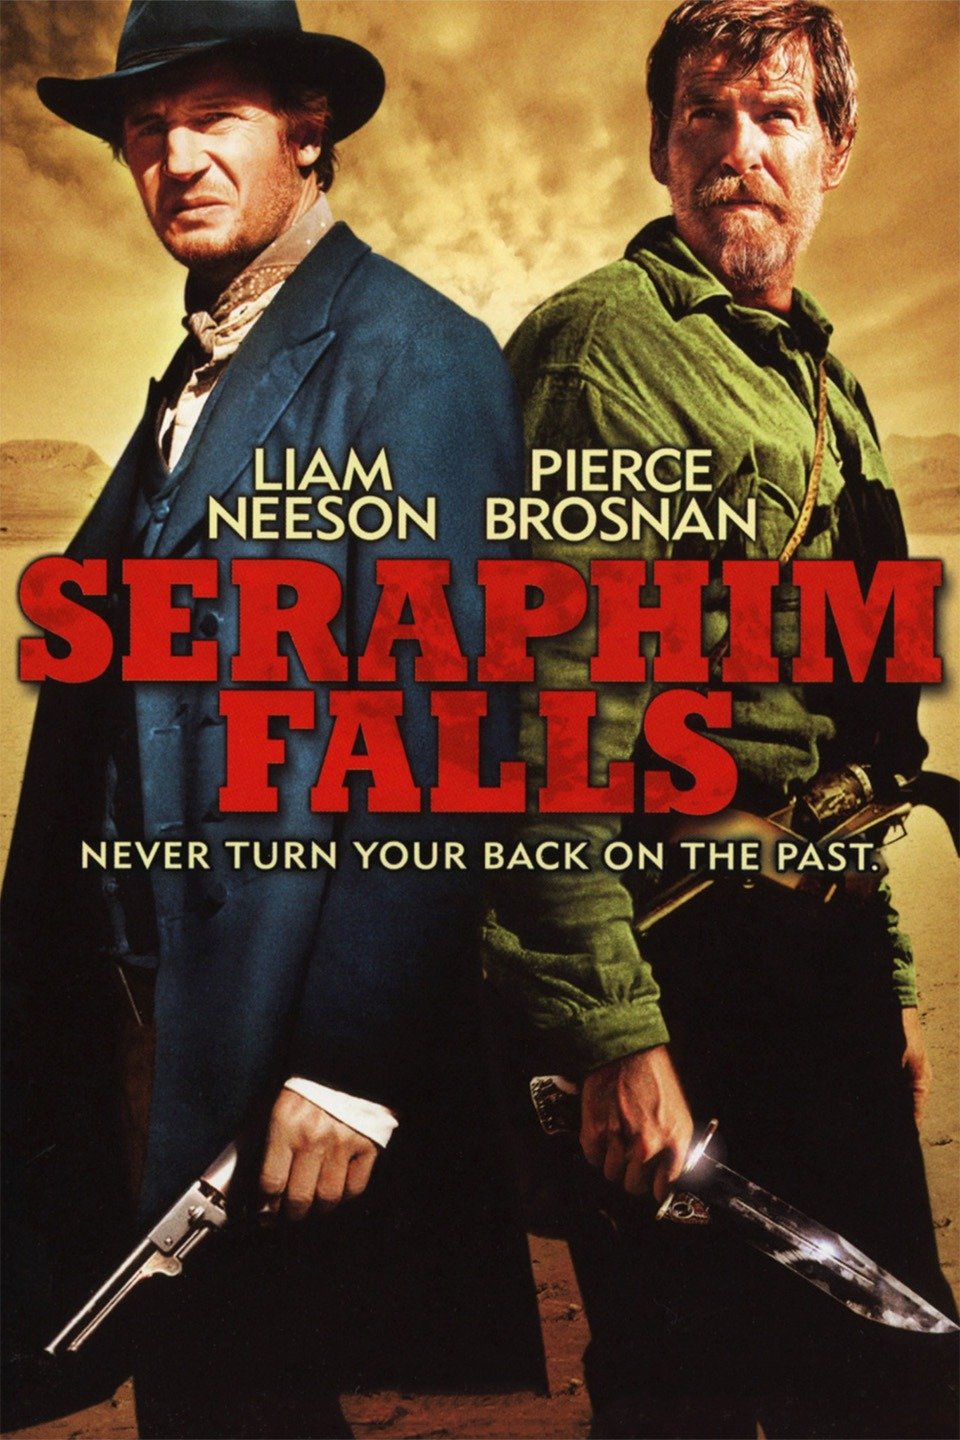 [MINI-HD] Seraphim Falls (2006) ล่าสุดขอบนรก [1080p] [พากย์ไทย DTS + อังกฤษ DTS] [Blu-ray.DTS.x264] [บรรยายไทย + อังกฤษ] [ซับไทย + อังกฤษ] [ONE2UP]